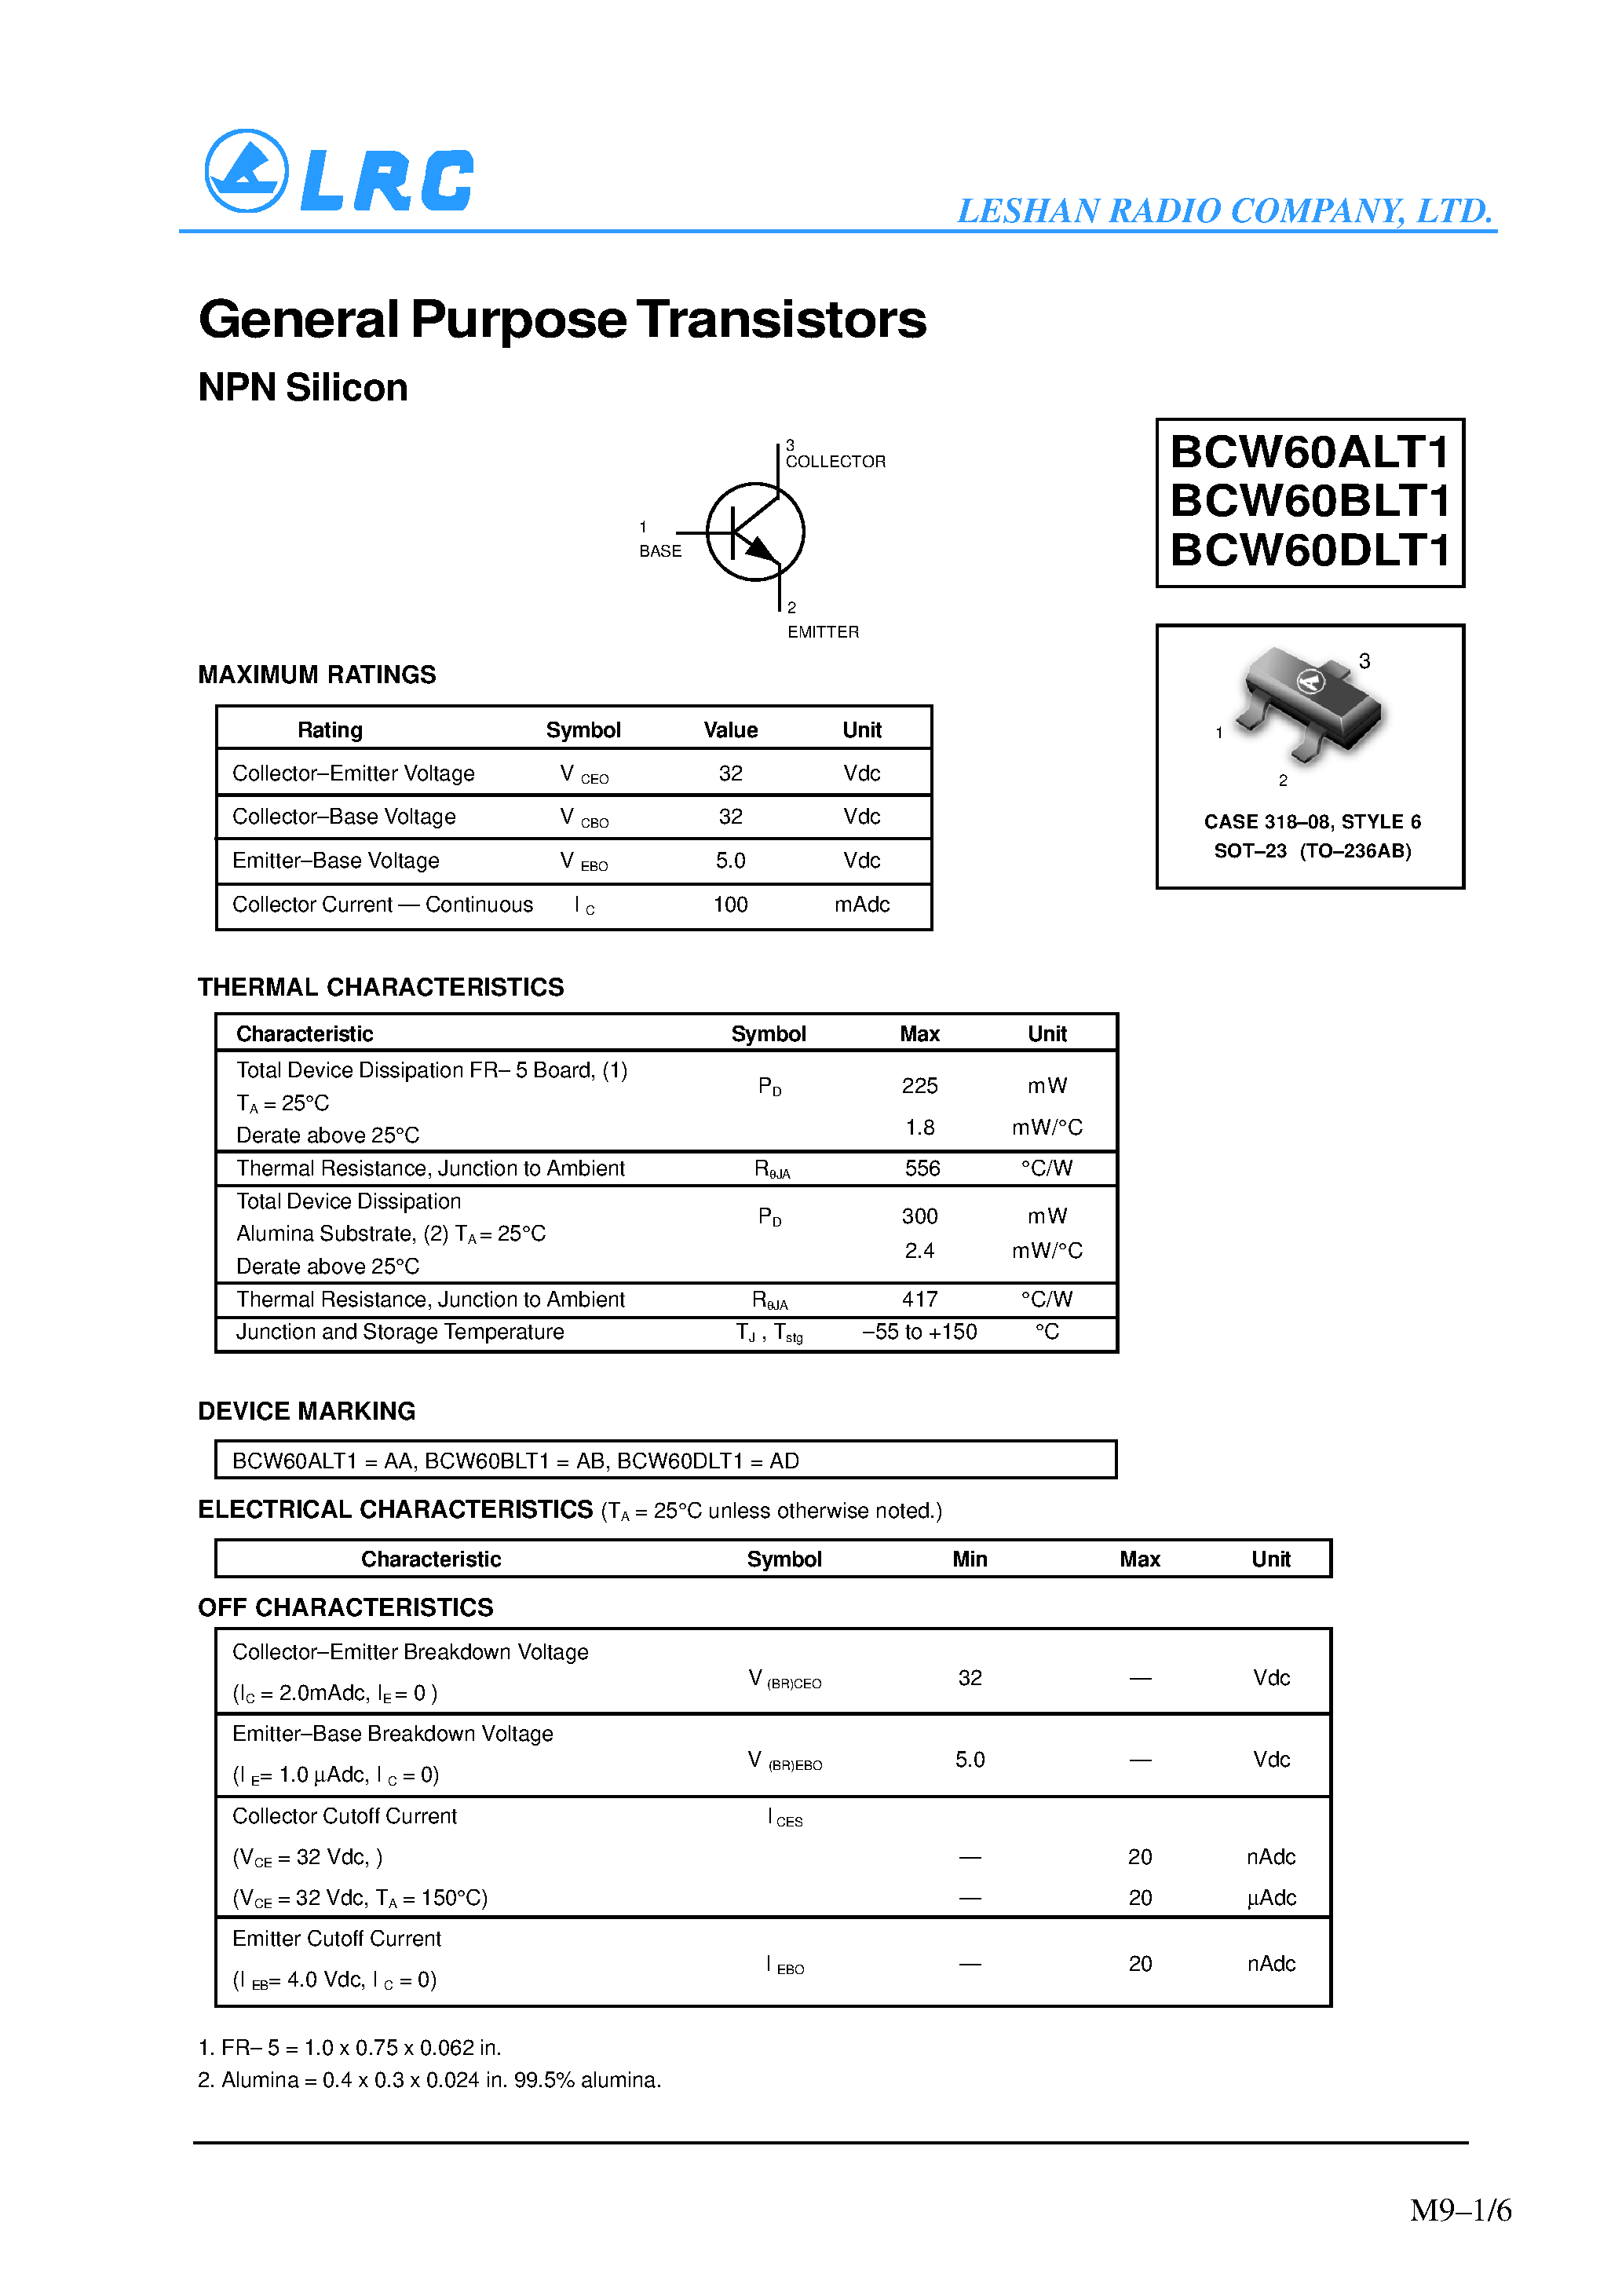 Datasheet BCWBLT1 - General Purpose Transistors(NPN Silicon) page 1